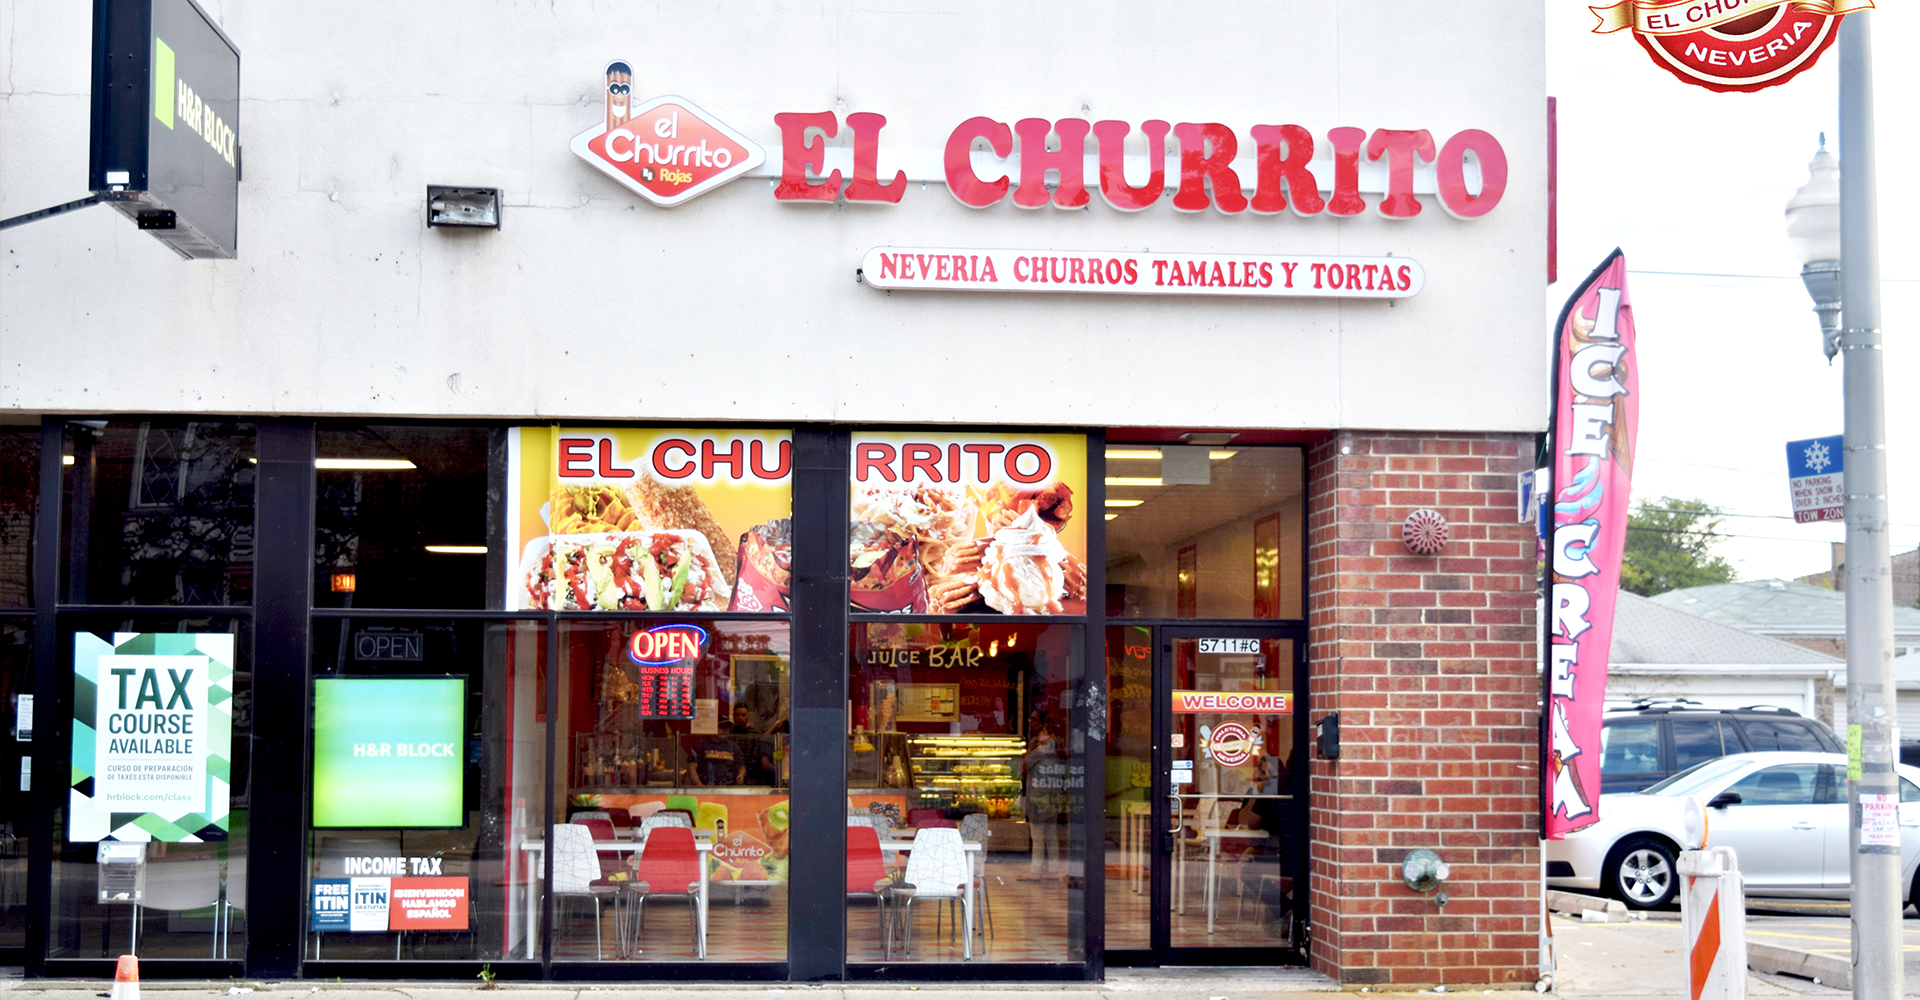 Welcome To El Churrito Rojas